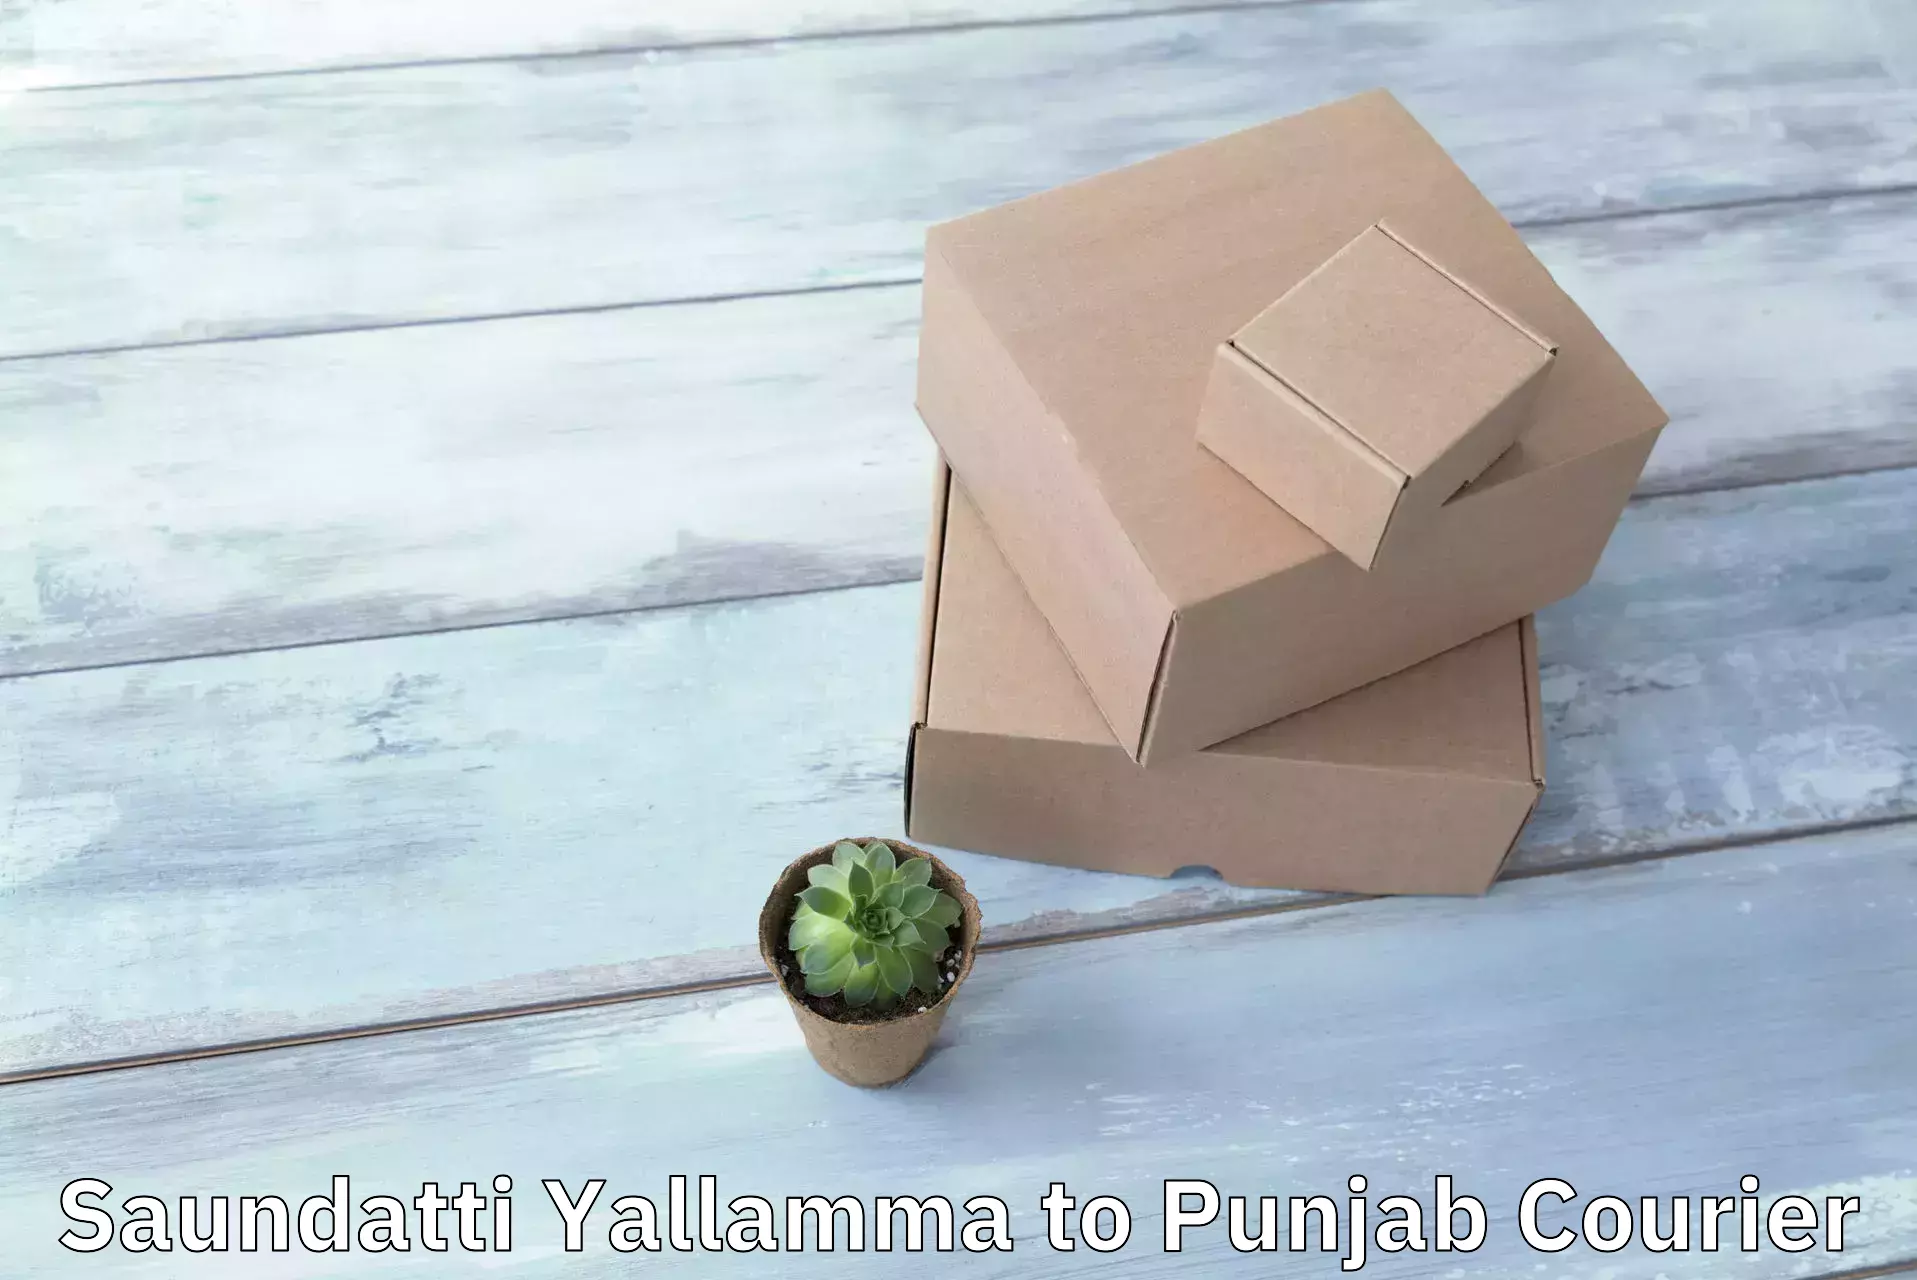 Sustainable delivery practices Saundatti Yallamma to Ajnala